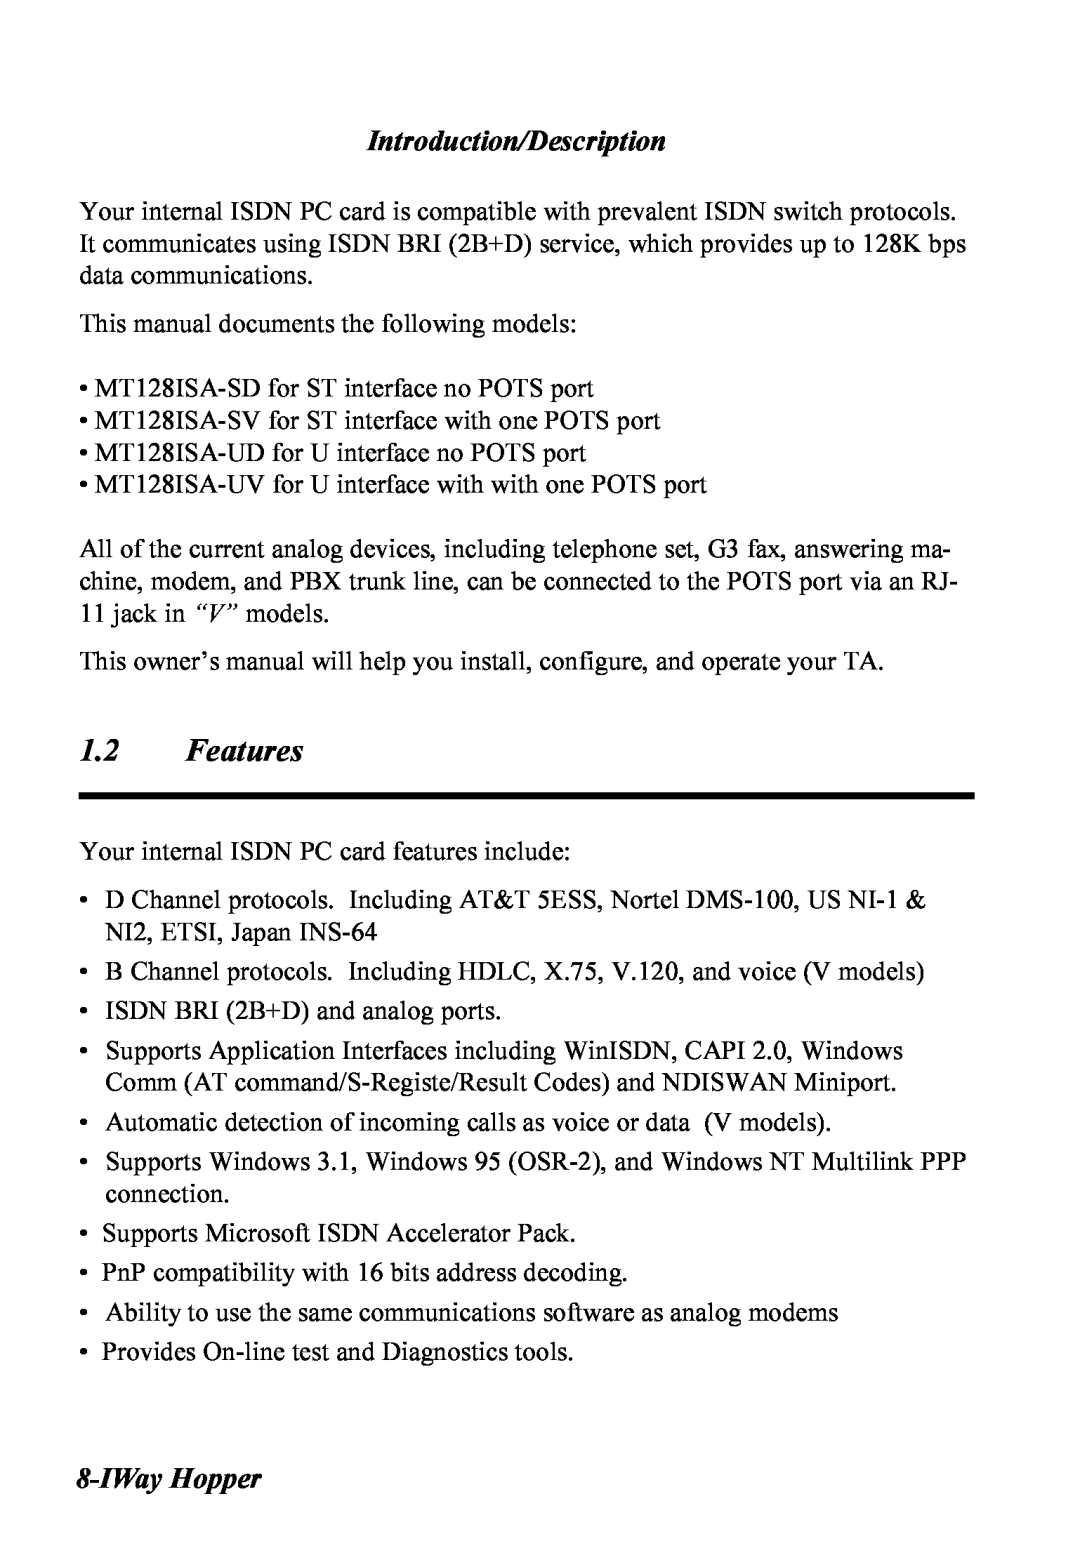 Multitech MT128ISA-SD, MT128ISA-SV, MT128ISA-UV, MT128ISA-UD manual Features, IWay Hopper, Introduction/Description 